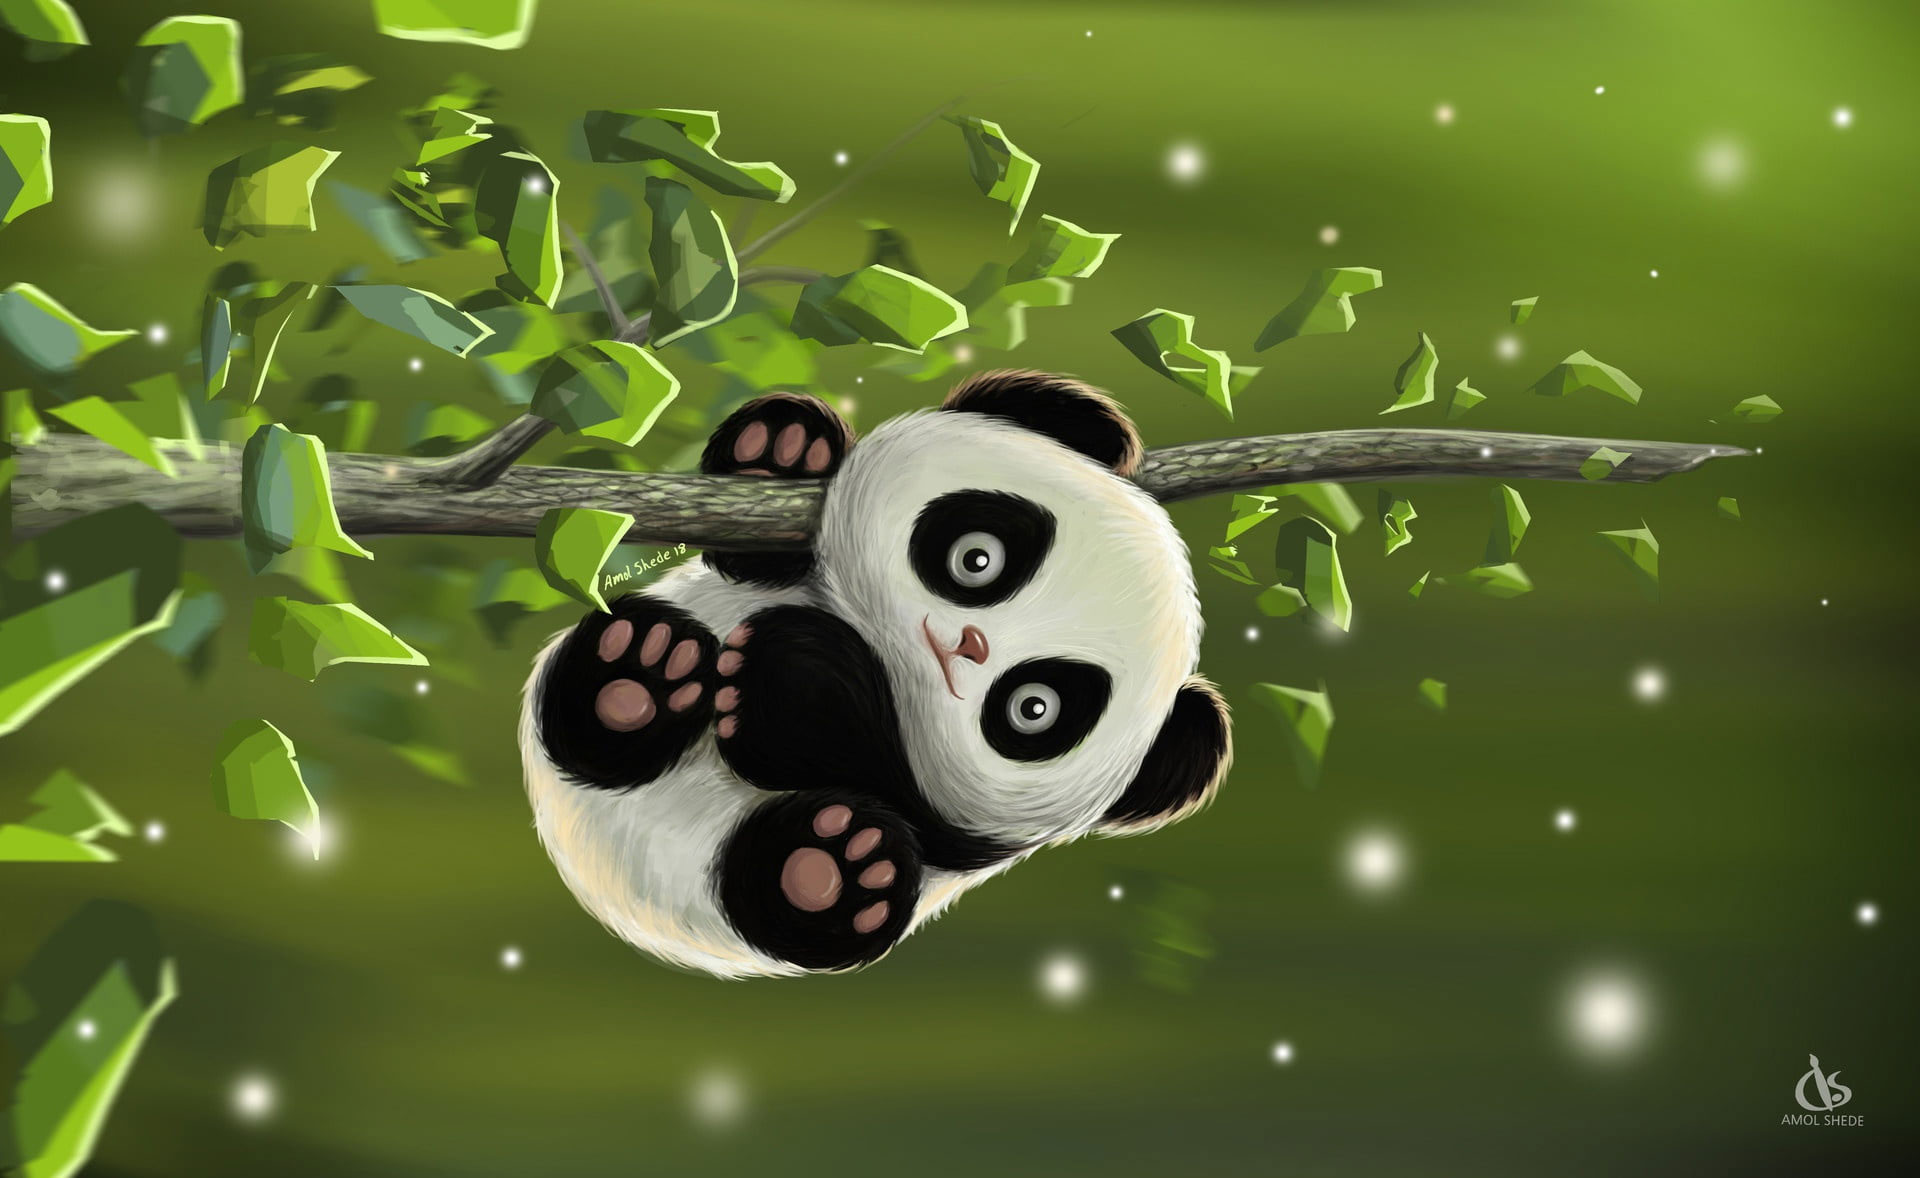 81486 Cute Panda Design Images Stock Photos  Vectors  Shutterstock